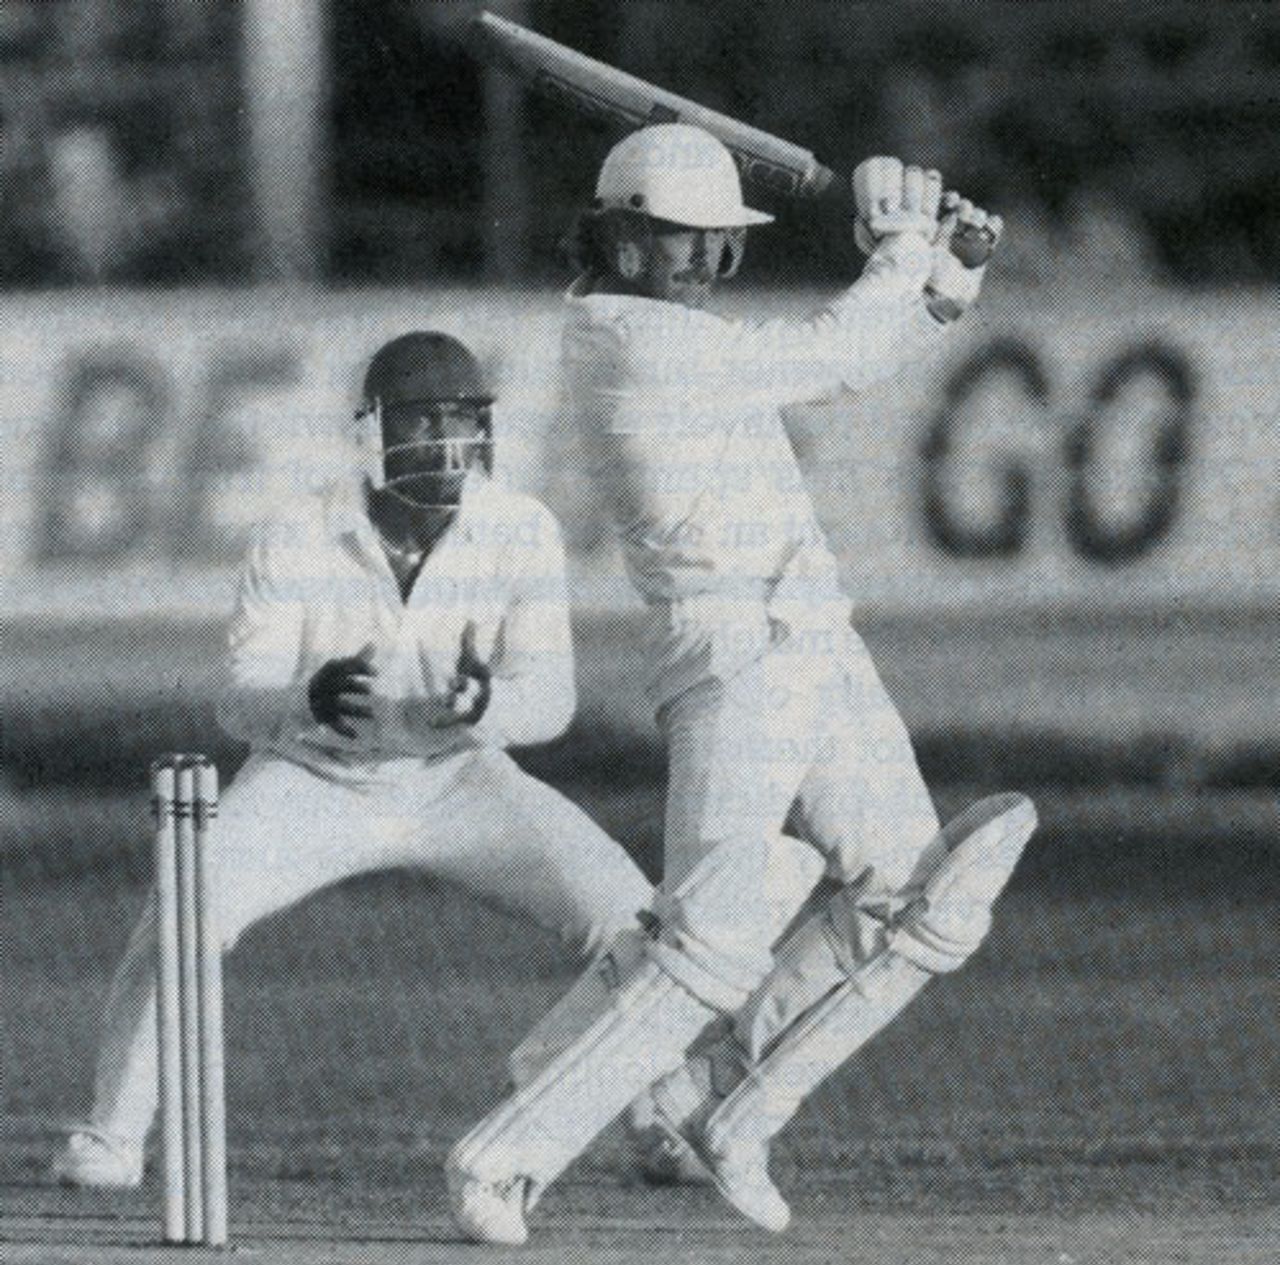 Wayne Larkins on his way to 46, West Indies v England, 1st Test, Jamaica, February 25, 1990